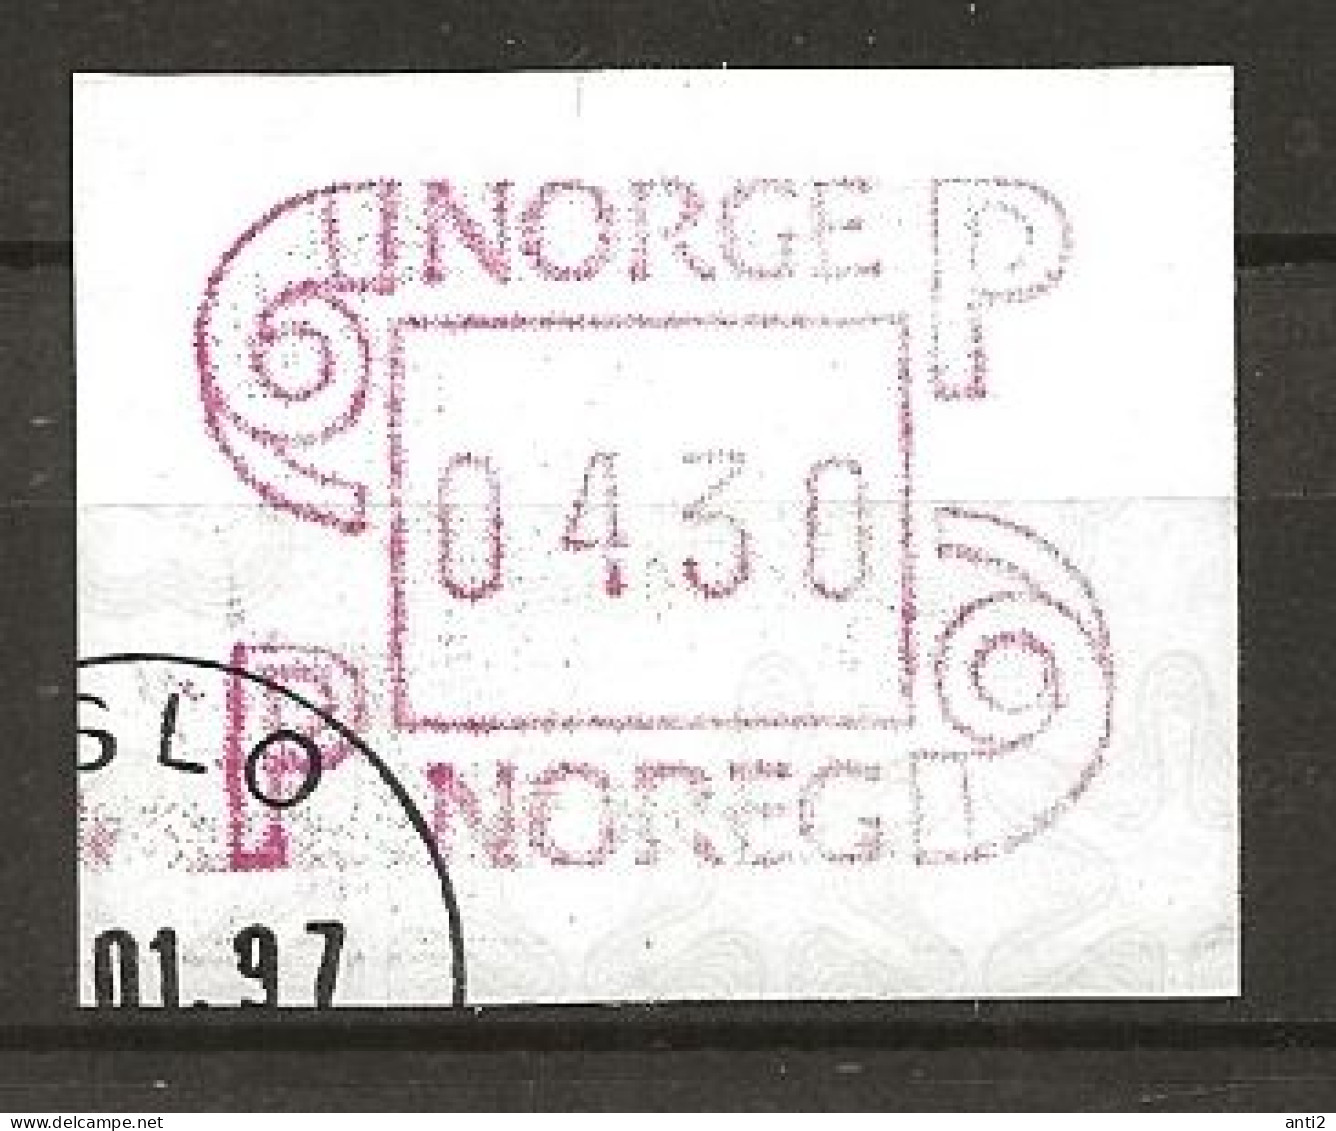 Norway 1997 ATM - Machine Label  NOK 4.30 - Vendel Machine Stamp Mi 3   - Cancelledn January 97 - Vignette [ATM]